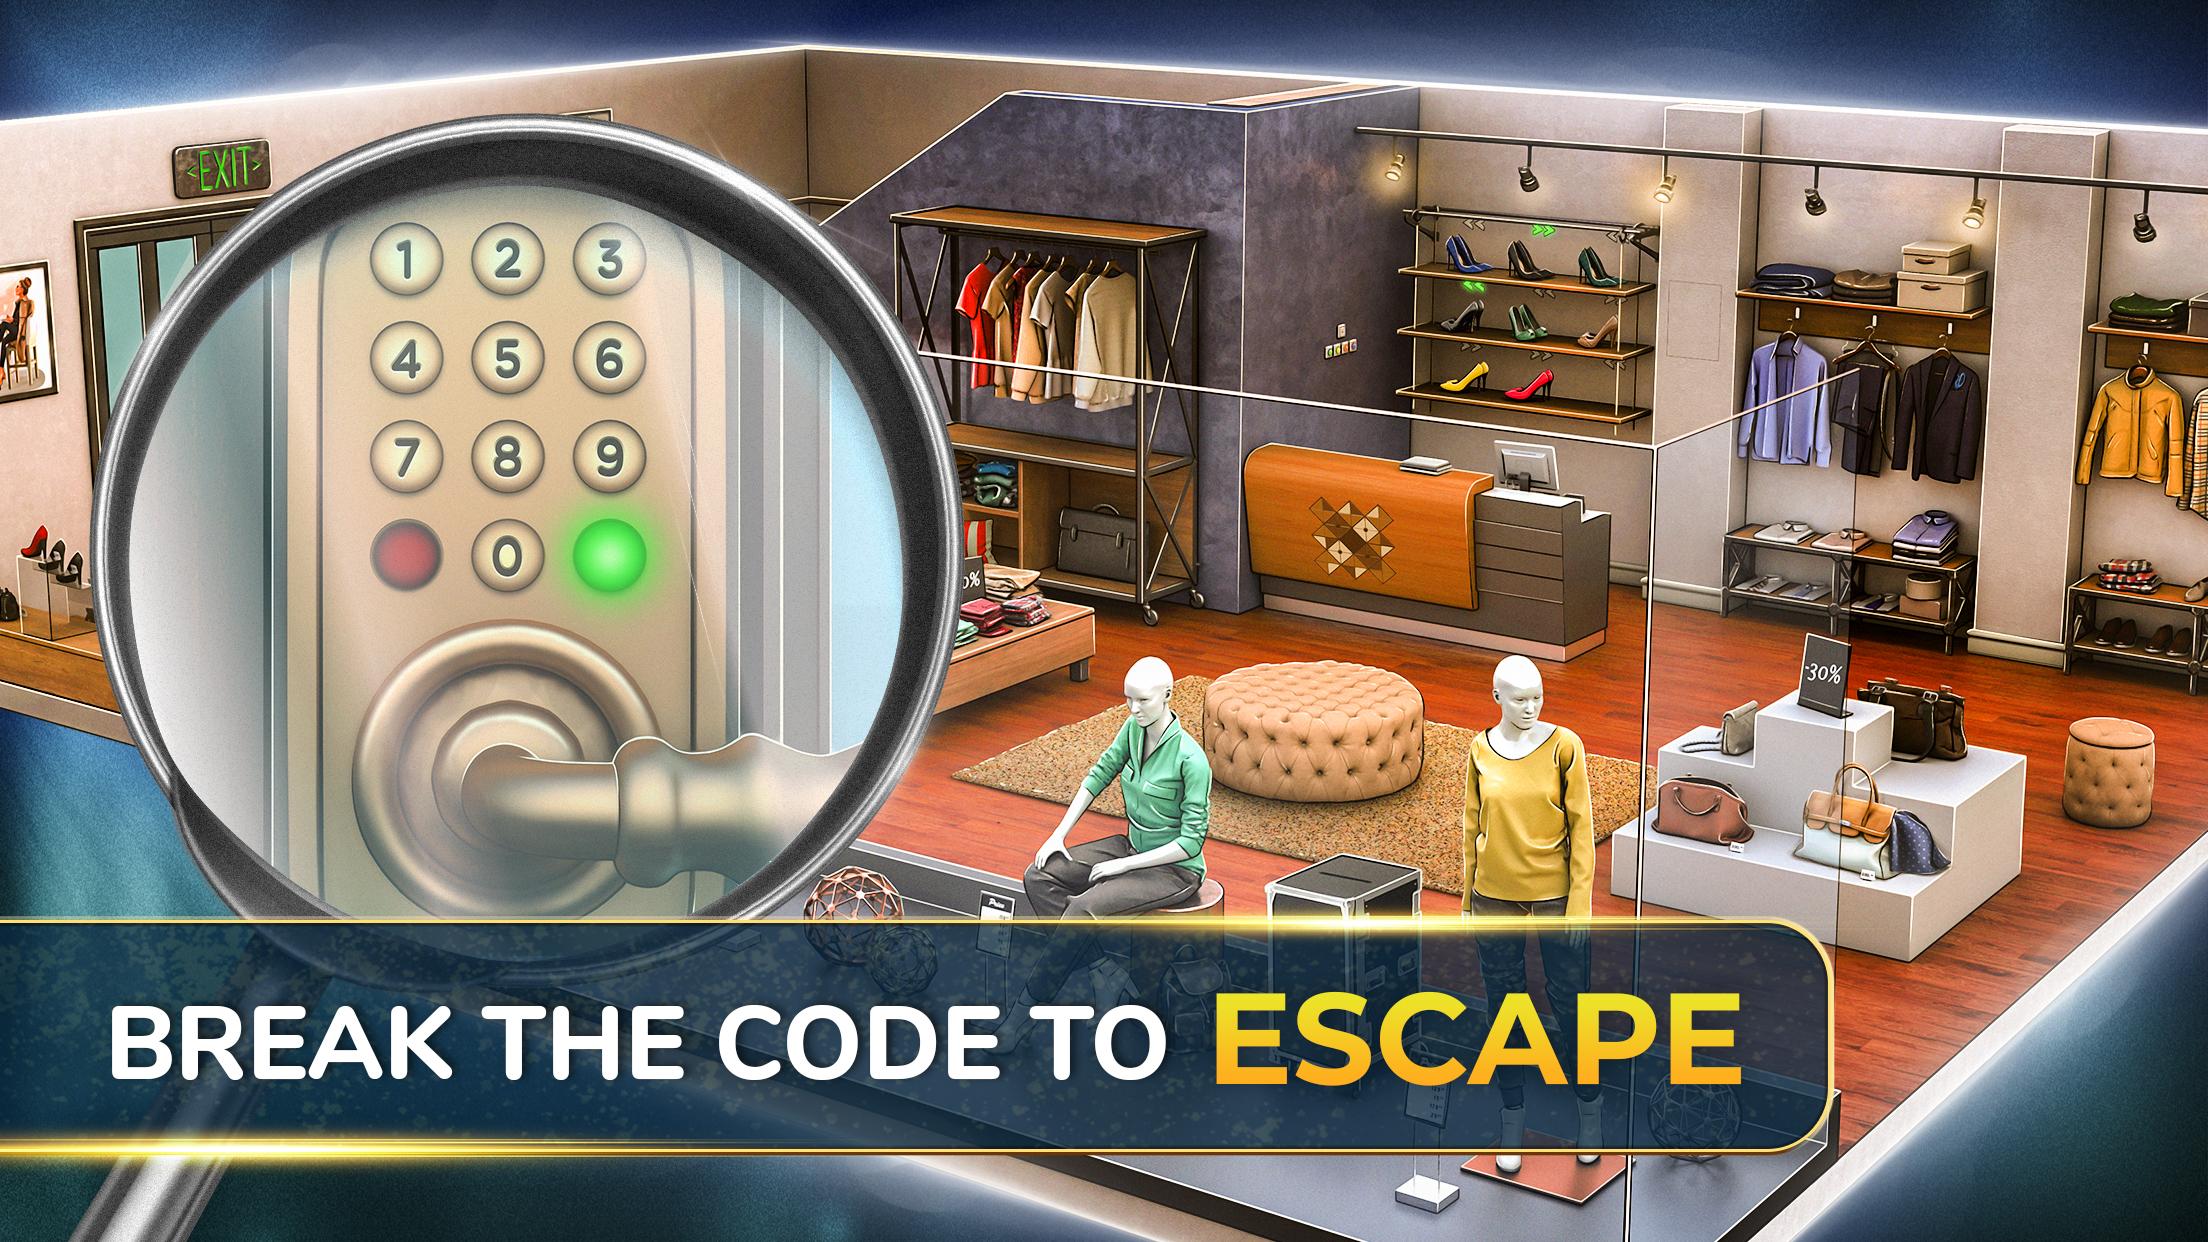 Комната игра на андроид. Игра Rooms exits. Побег из комнаты Escape Room. The Room (игра). Побег из комнаты игра на андроид.